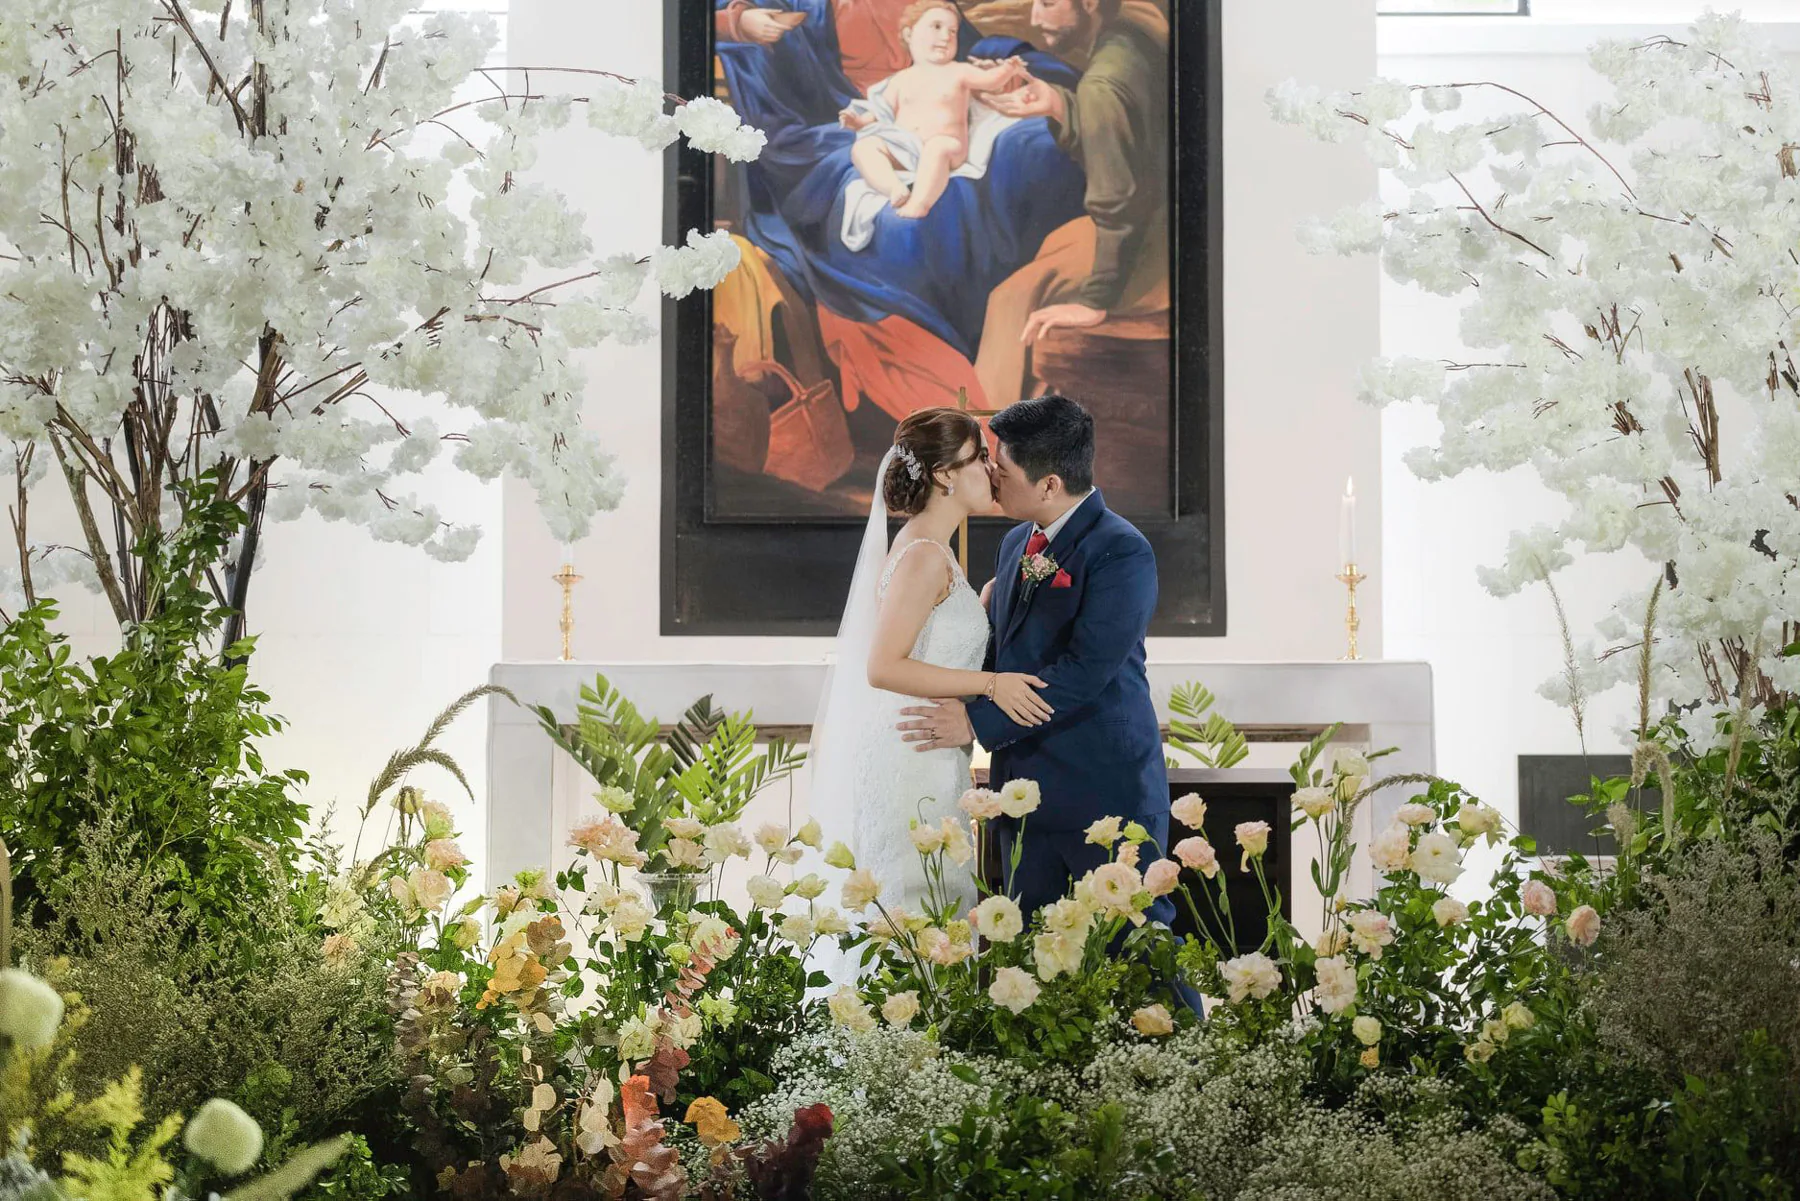 lovely couple on ceremony floral setup by Khim Cruz